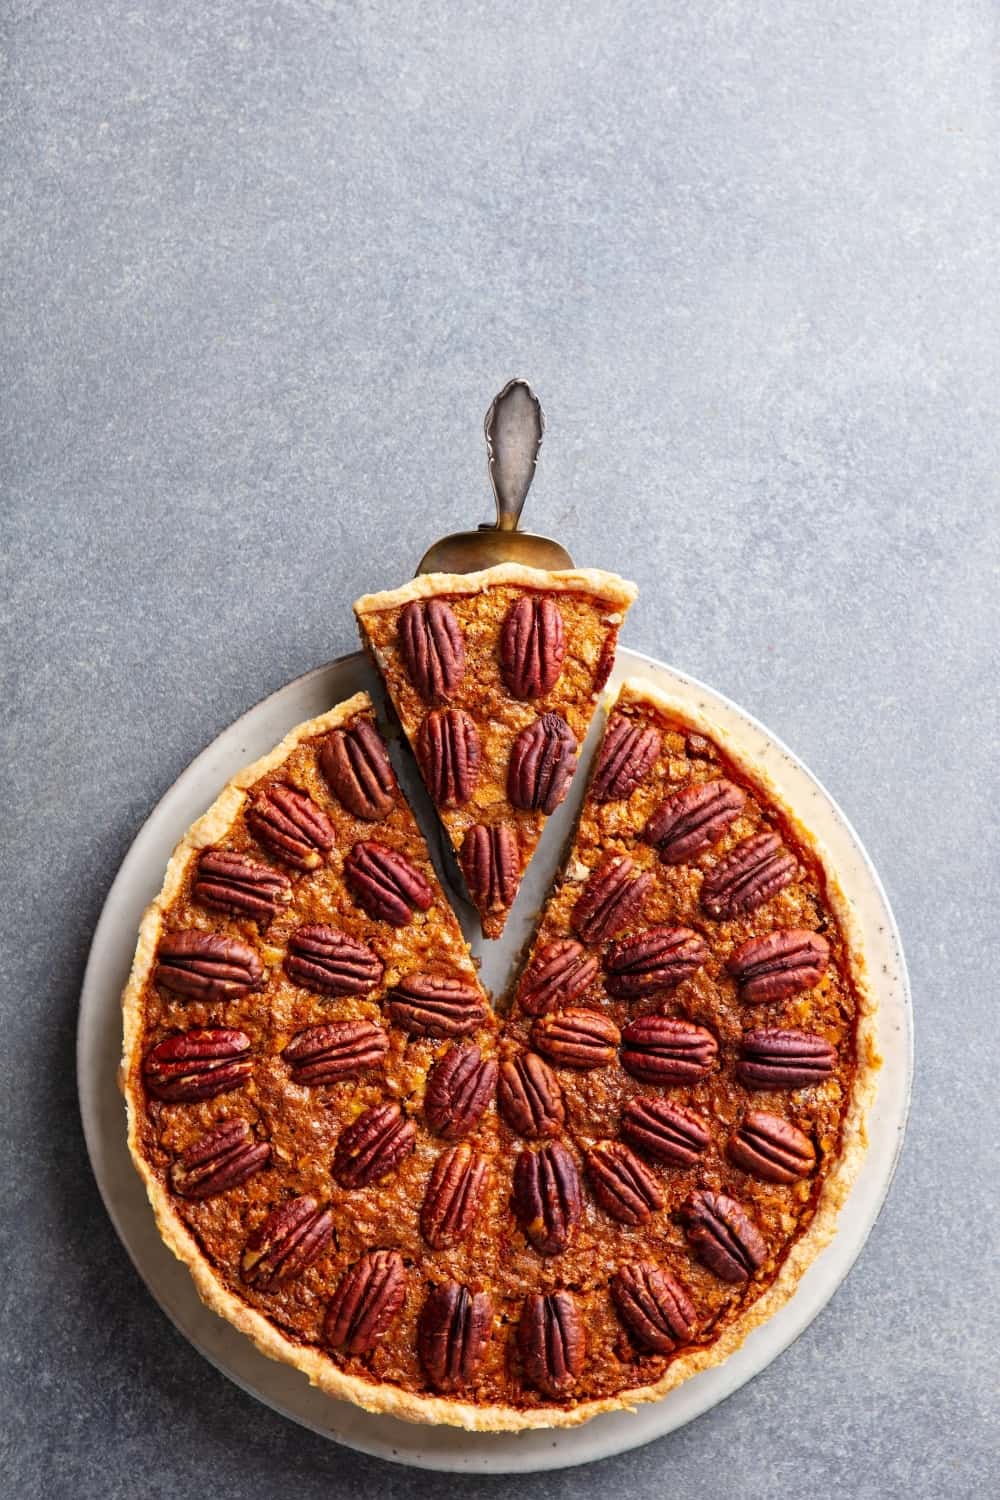 Pecan nut pie, on a plate.